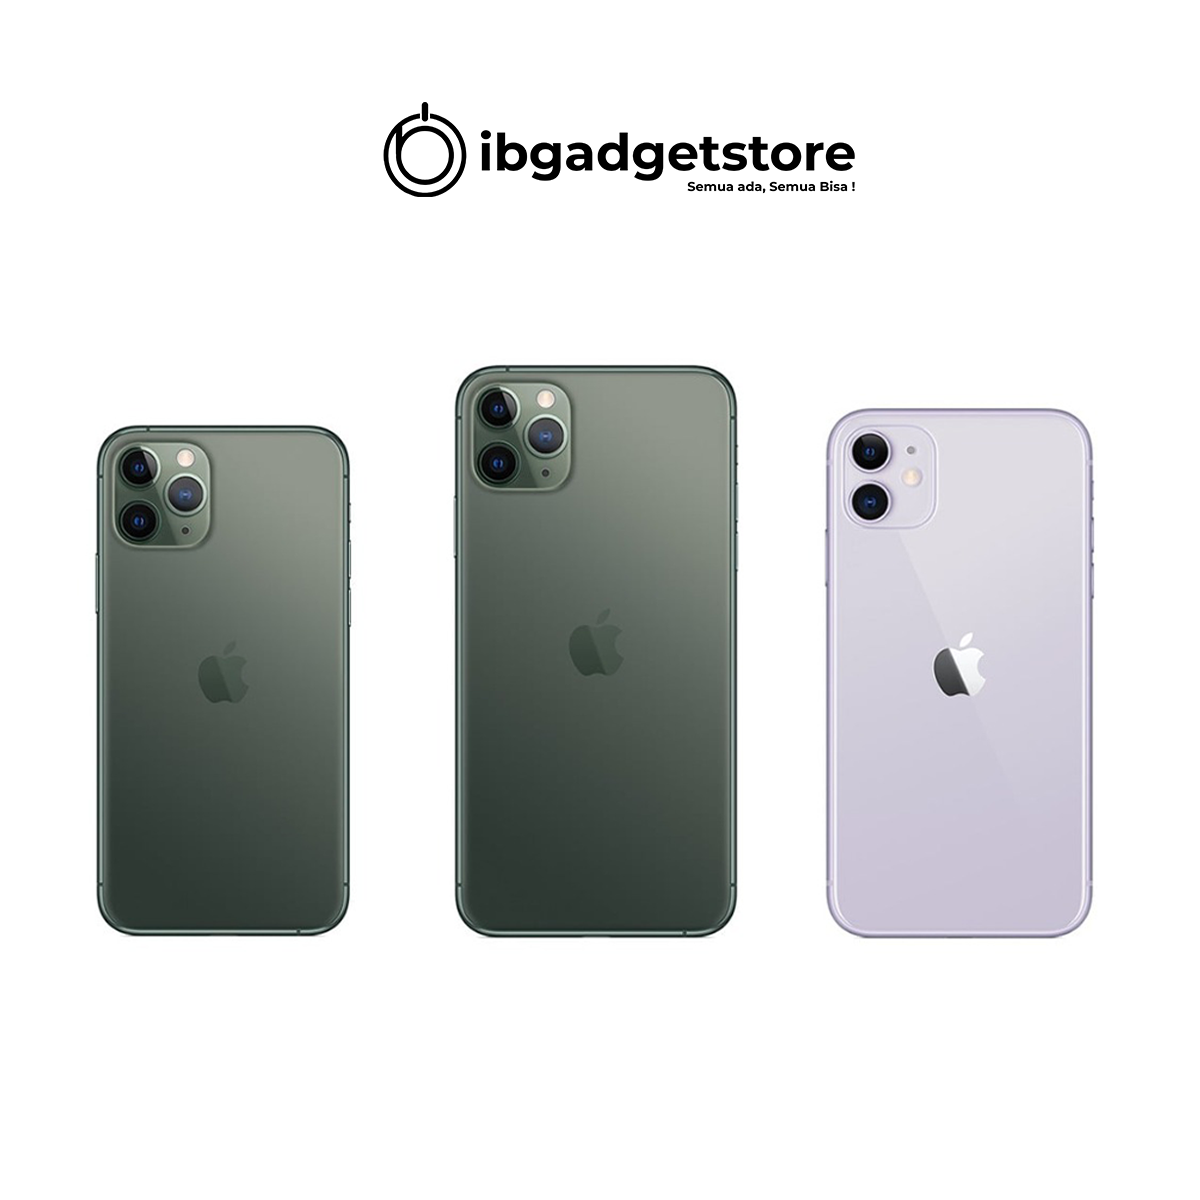 iPhone 11, iPhone 11 Pro, iPhone 11 Pro Max